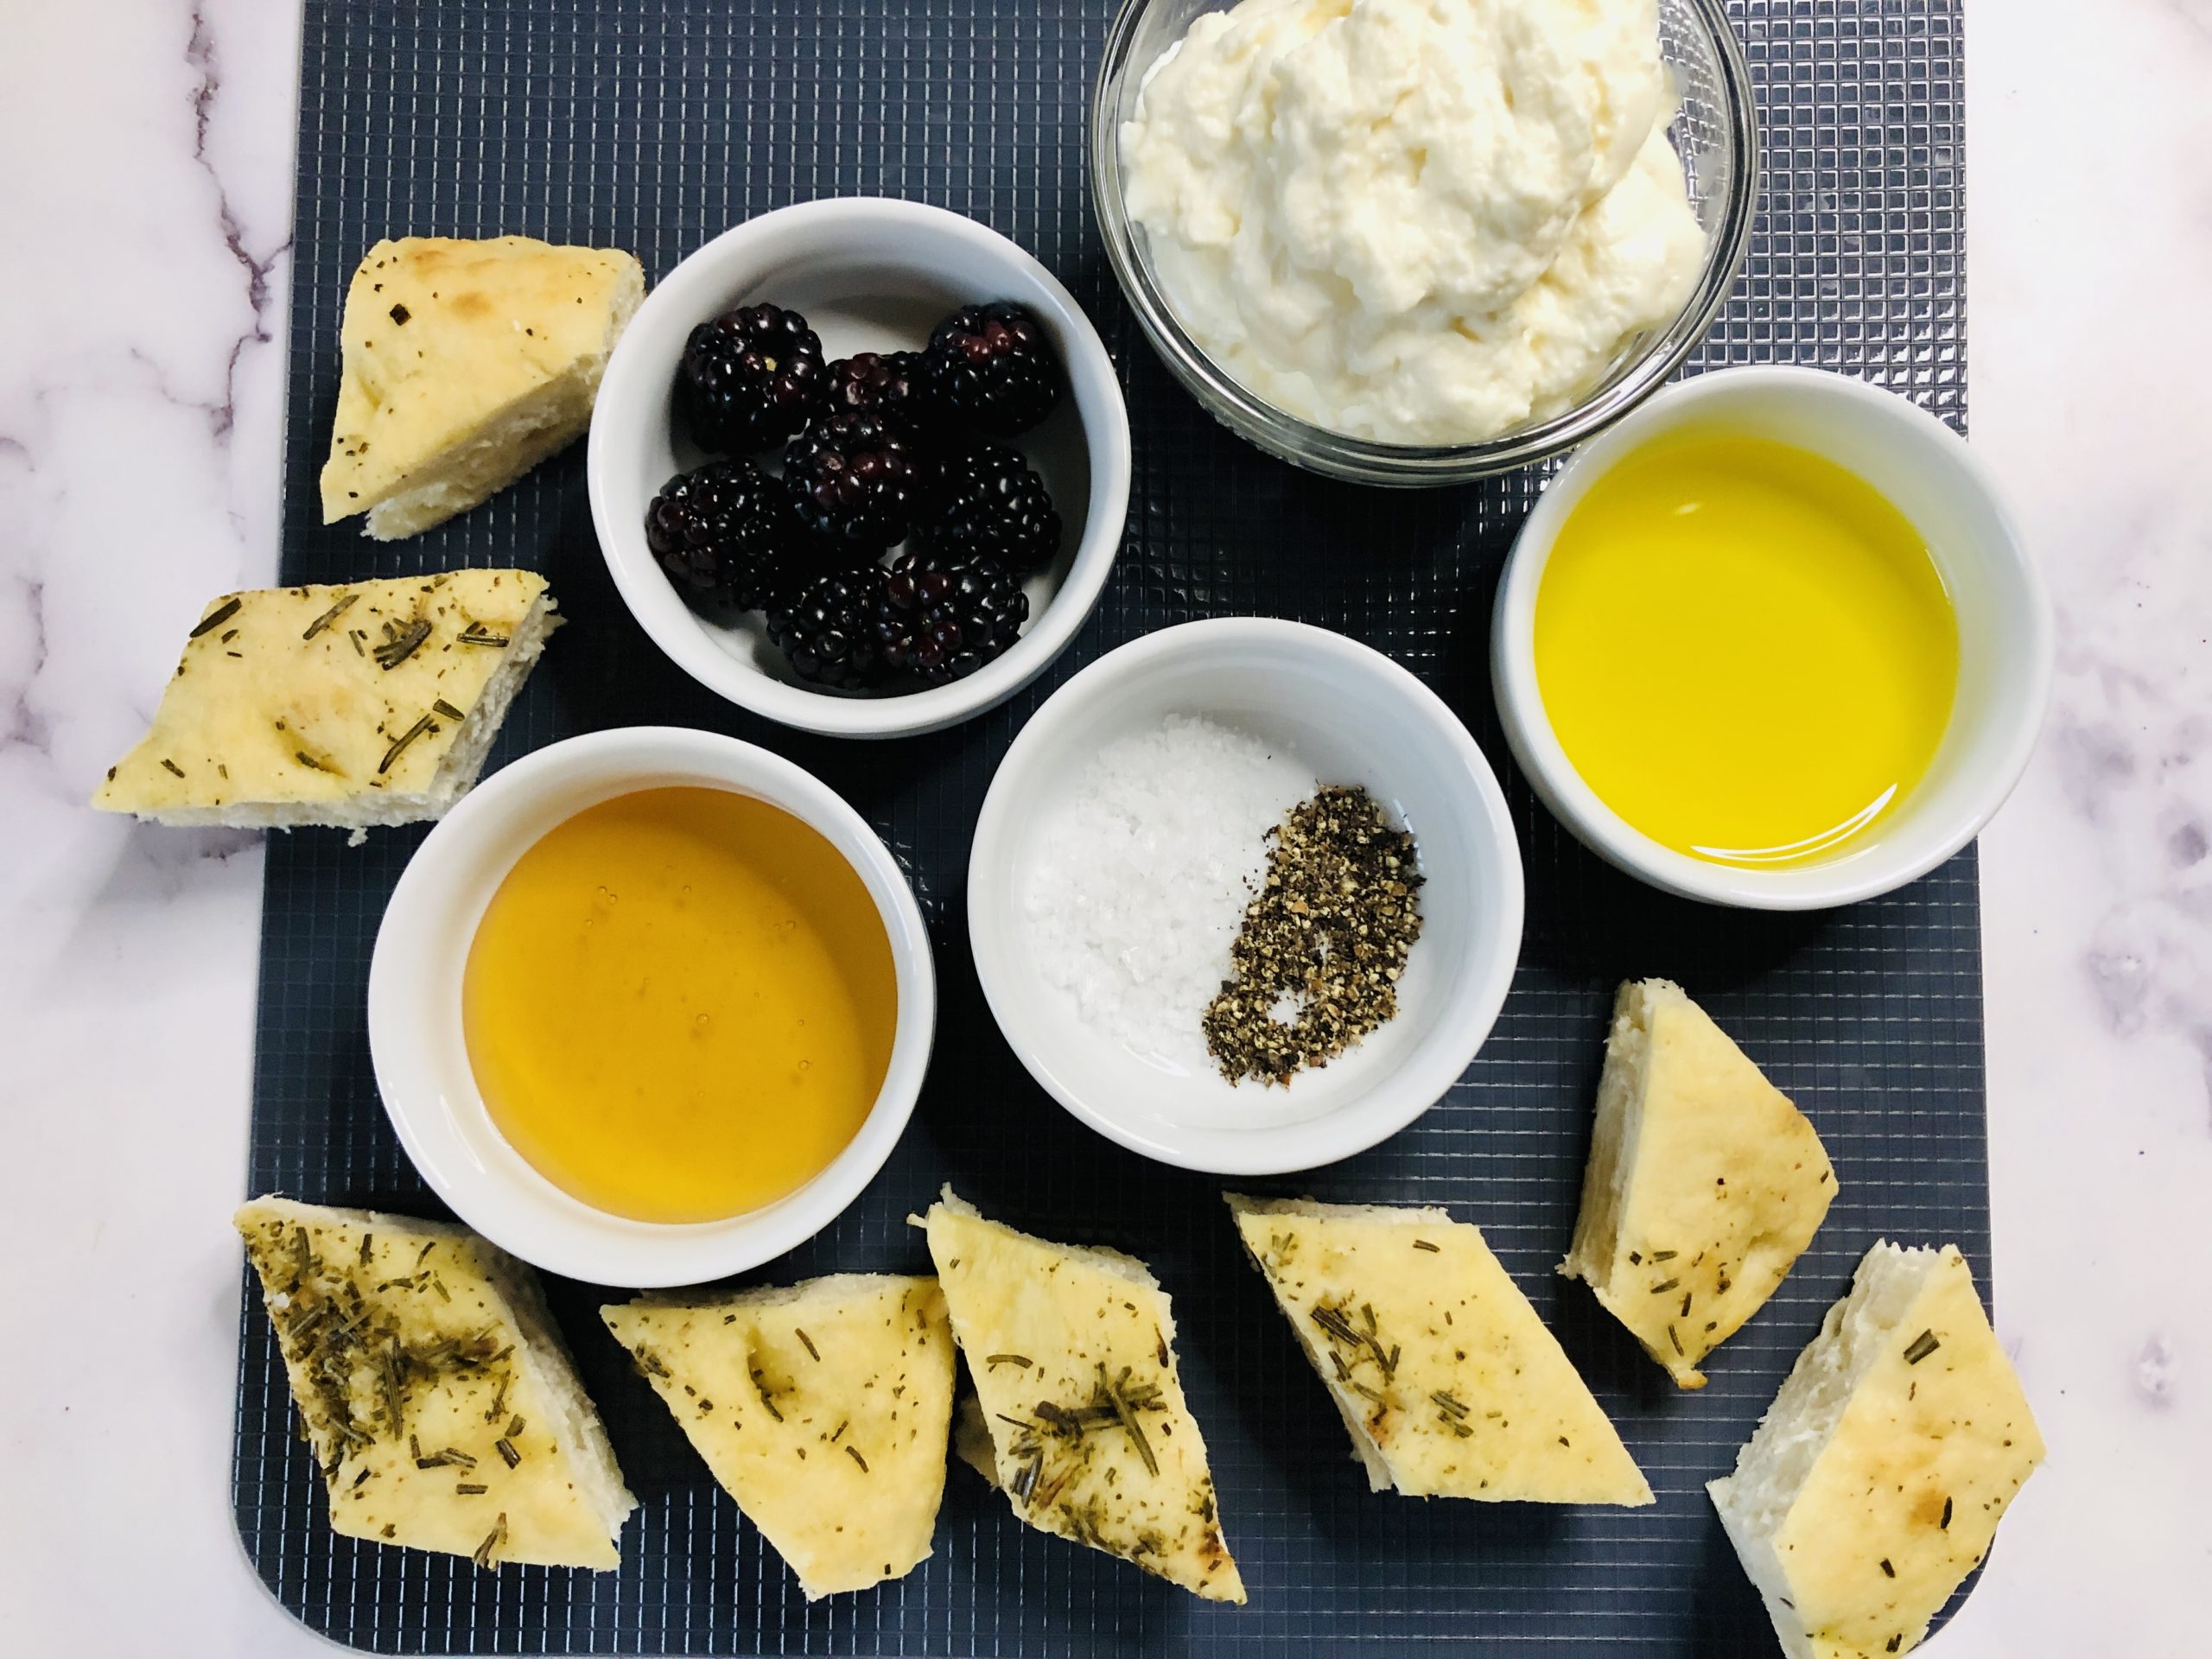 Ricotta cheese, honey, herbs and crusty bread.